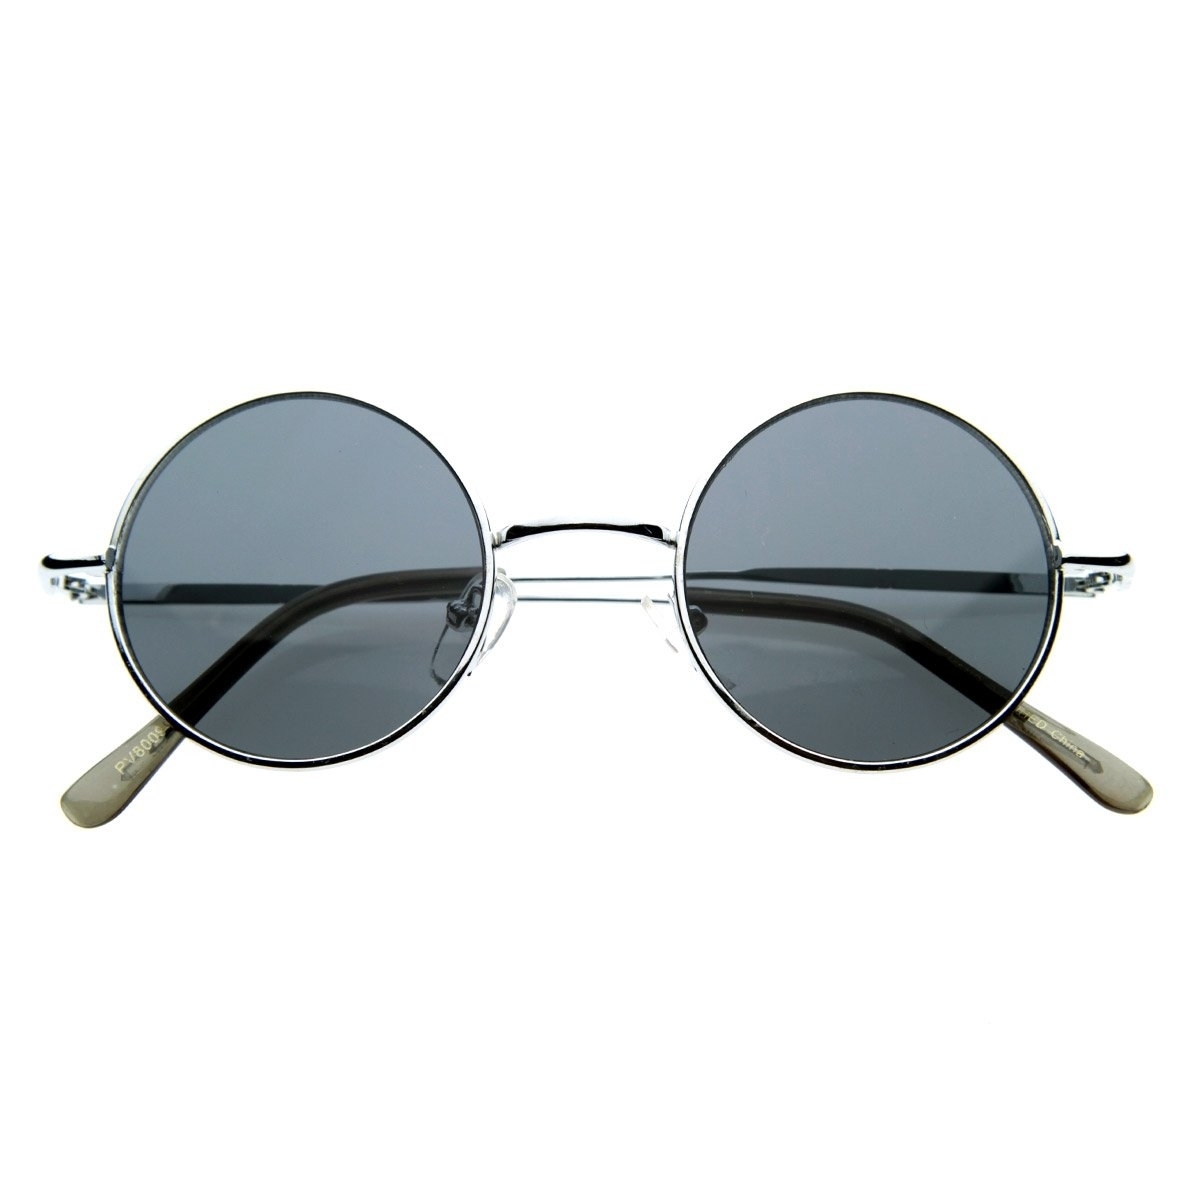 Small Retro-Vintage Style Lennon Inspired Round Metal Circle Sunglasses - Black